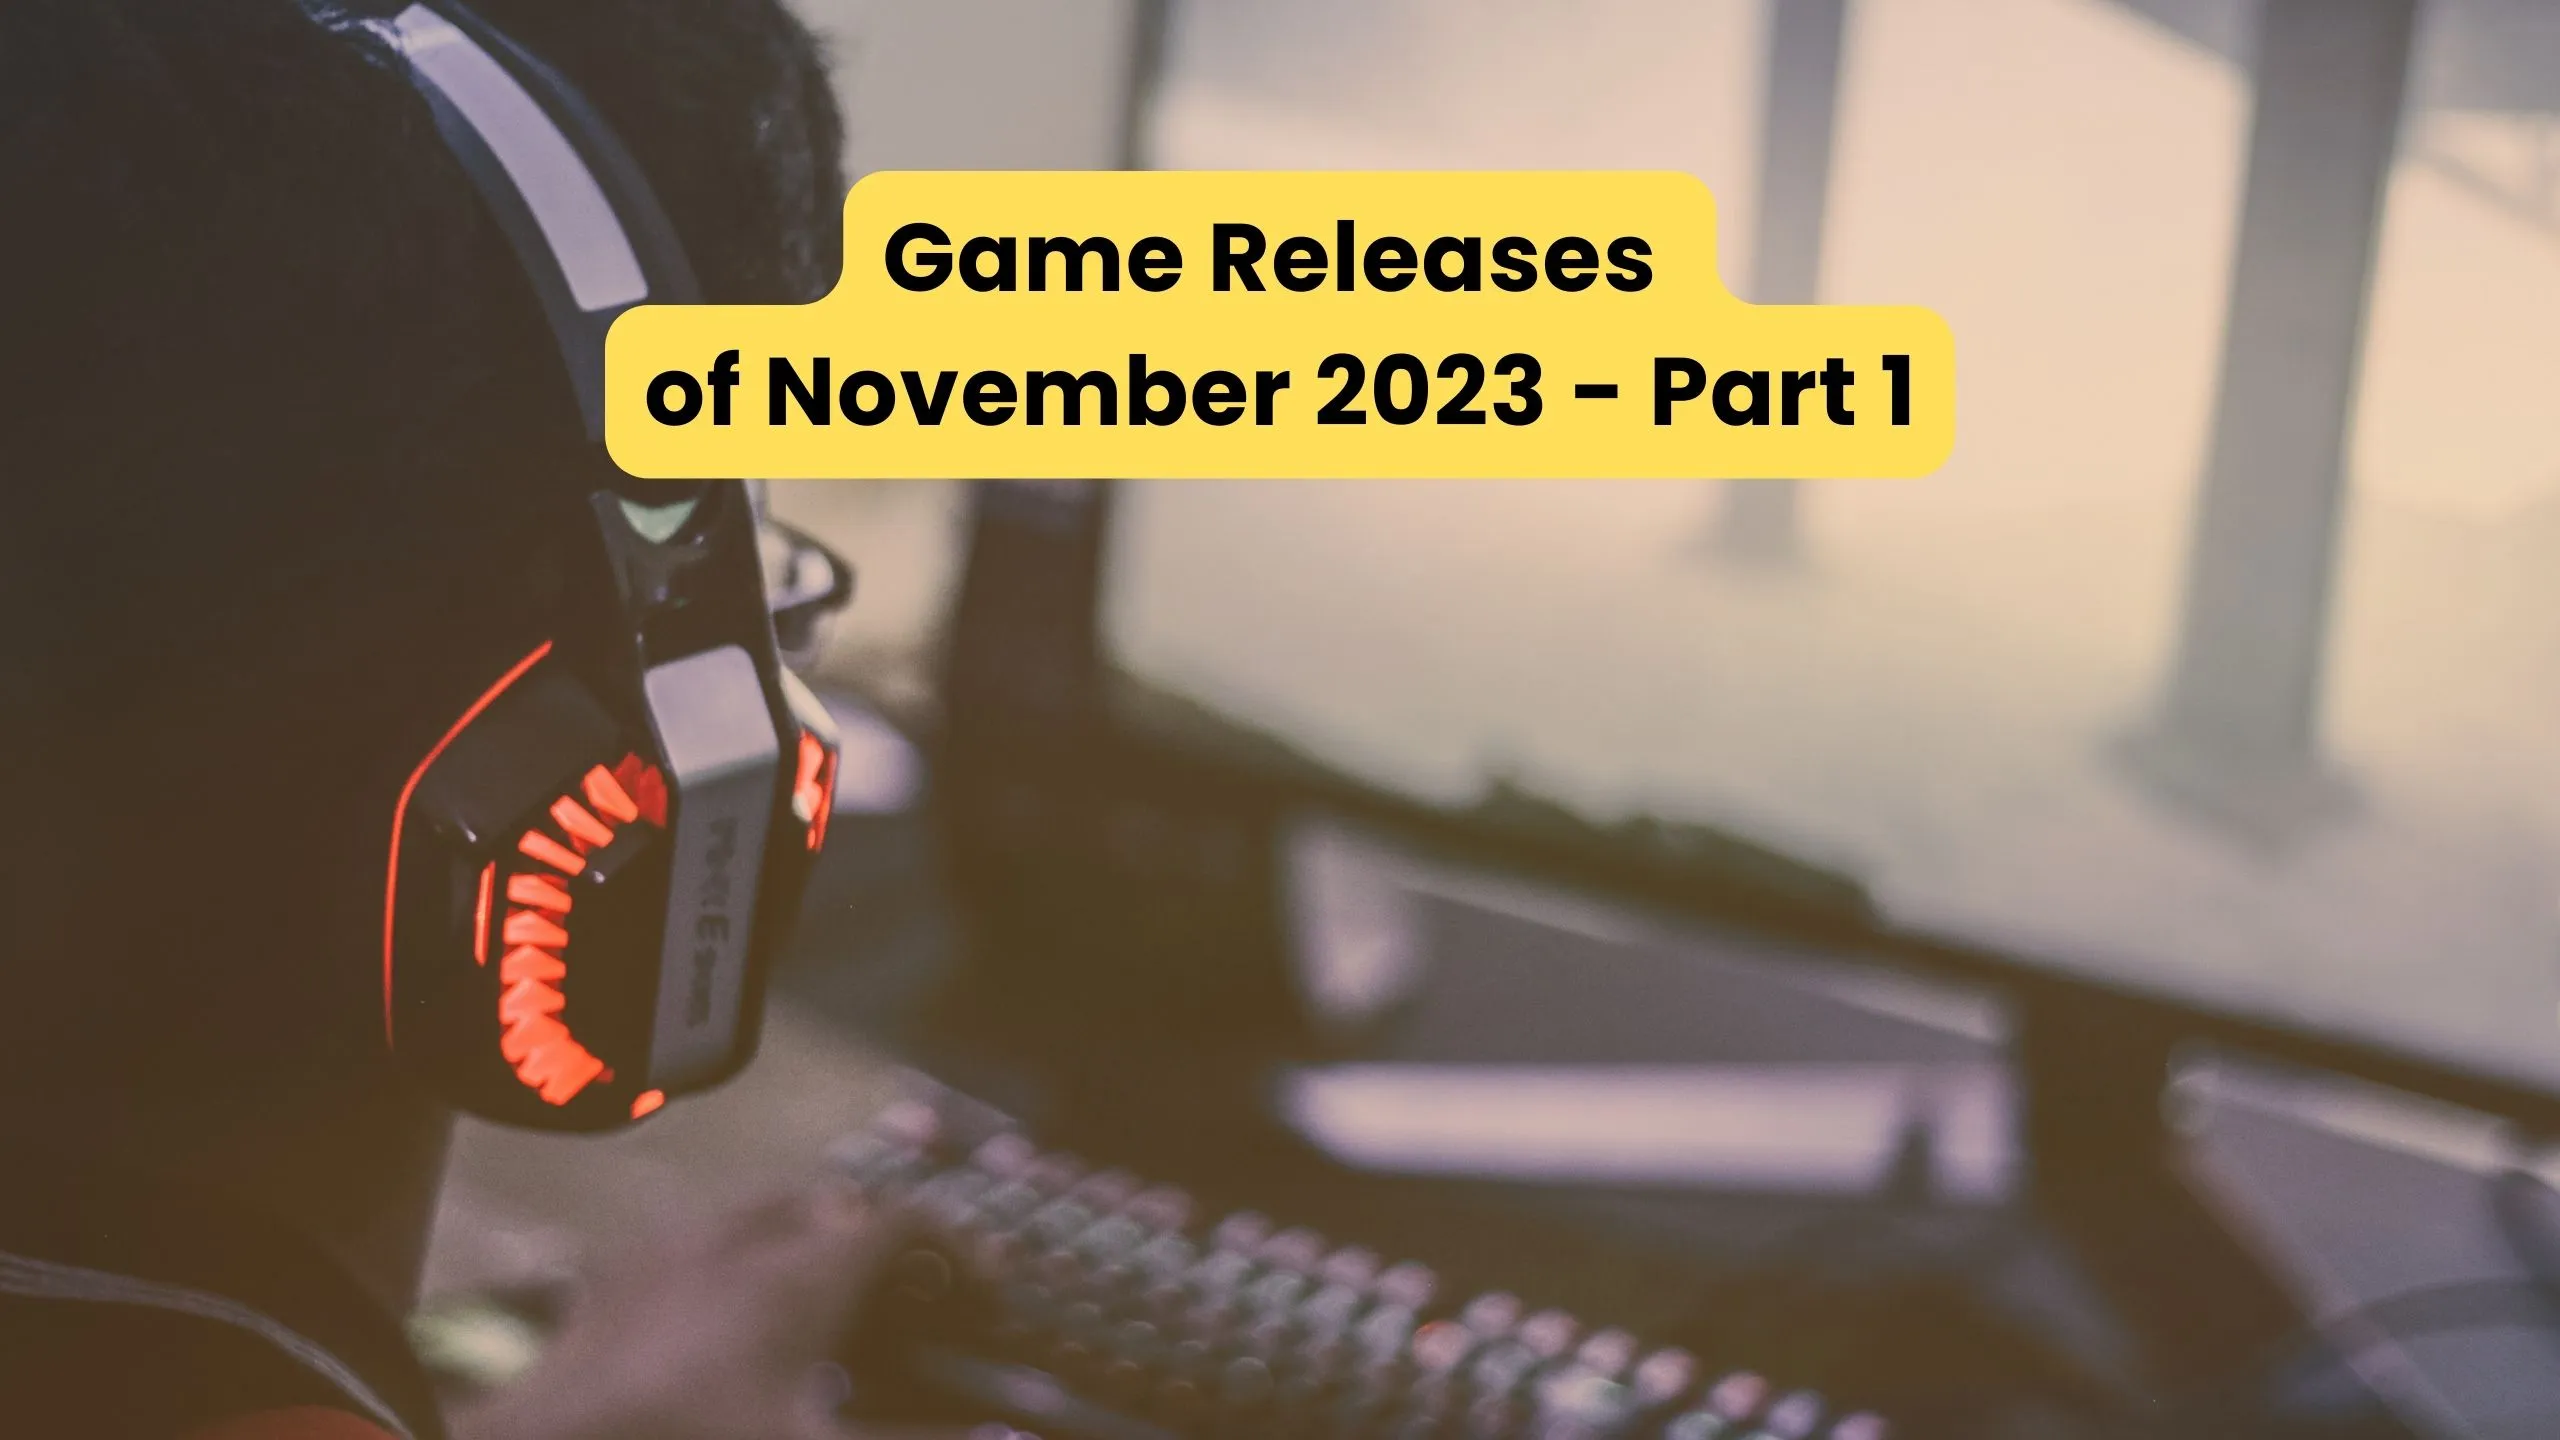 Game Releases November 2023